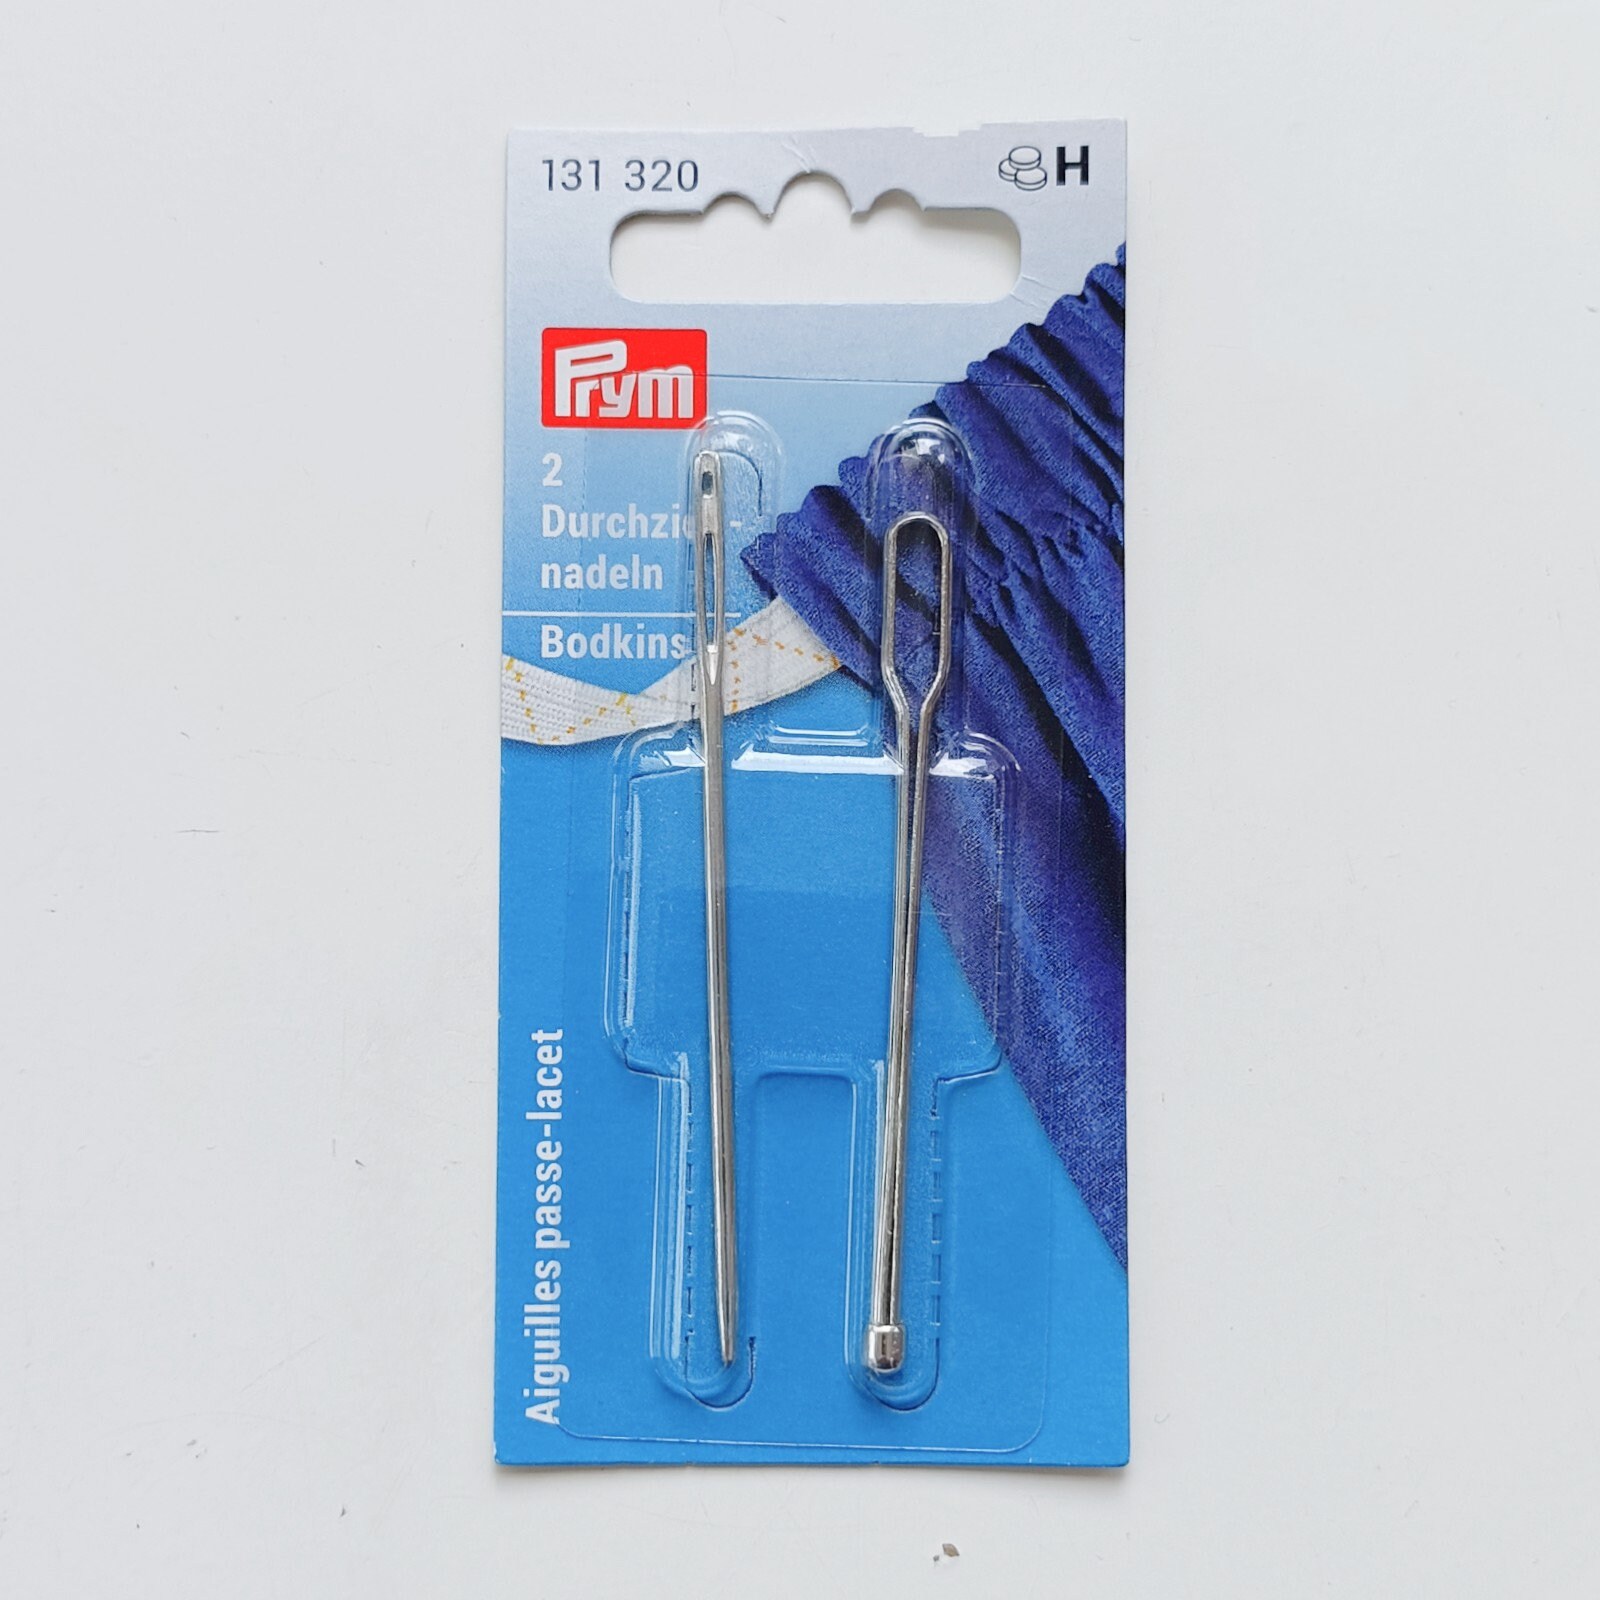 SEWING ACCESSARIES LOOP Turner Hook Needlework Tool Needle Threader $3.19 -  PicClick AU